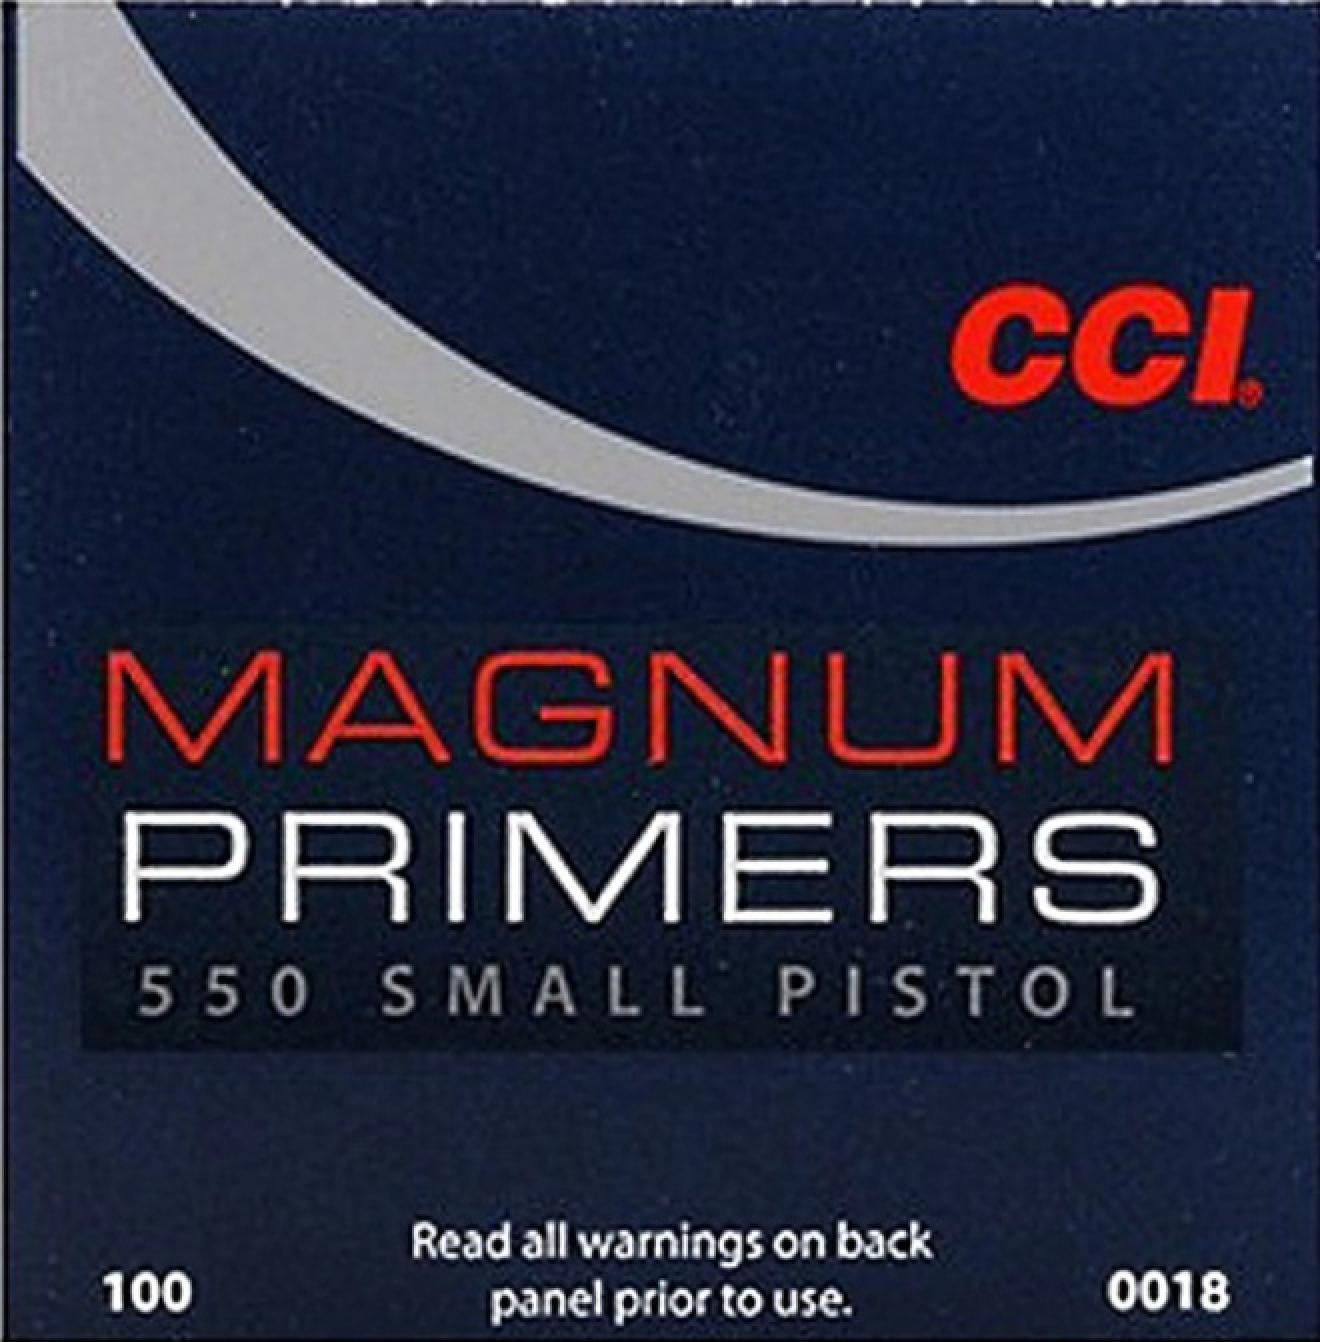 CCI Small Pistol Magnum Primers #550 - 100 Count